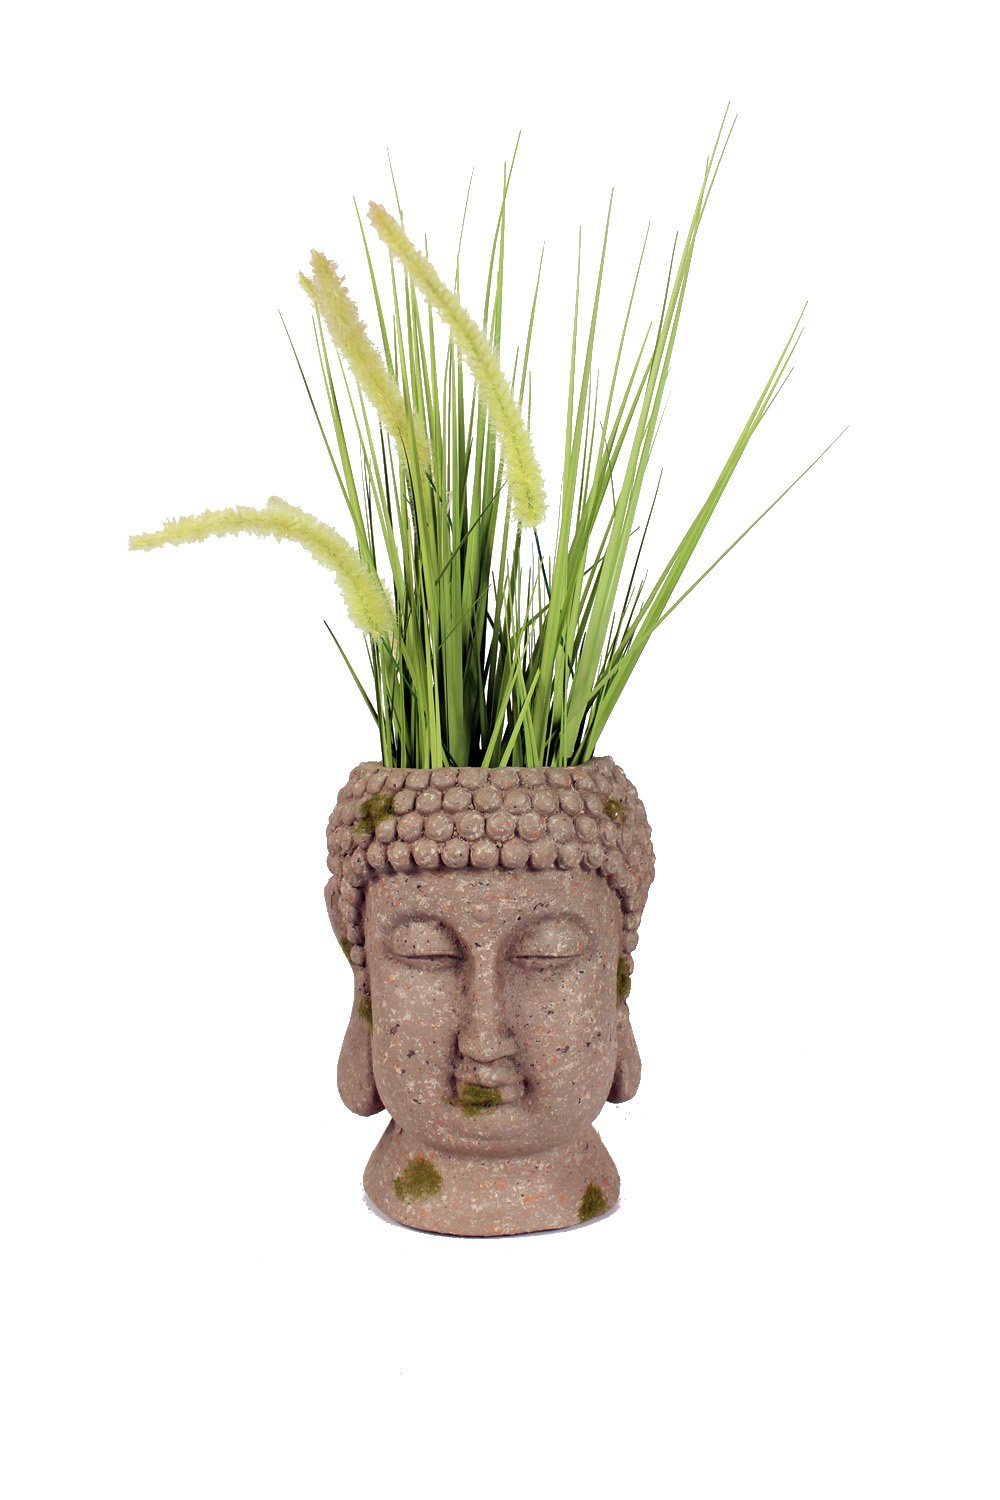 Arnusa Blumentopf Buddha Kopf Shiva Büste Pflanztopf, Gartendekoration Gartenfigur Skulptur bepflanzbar